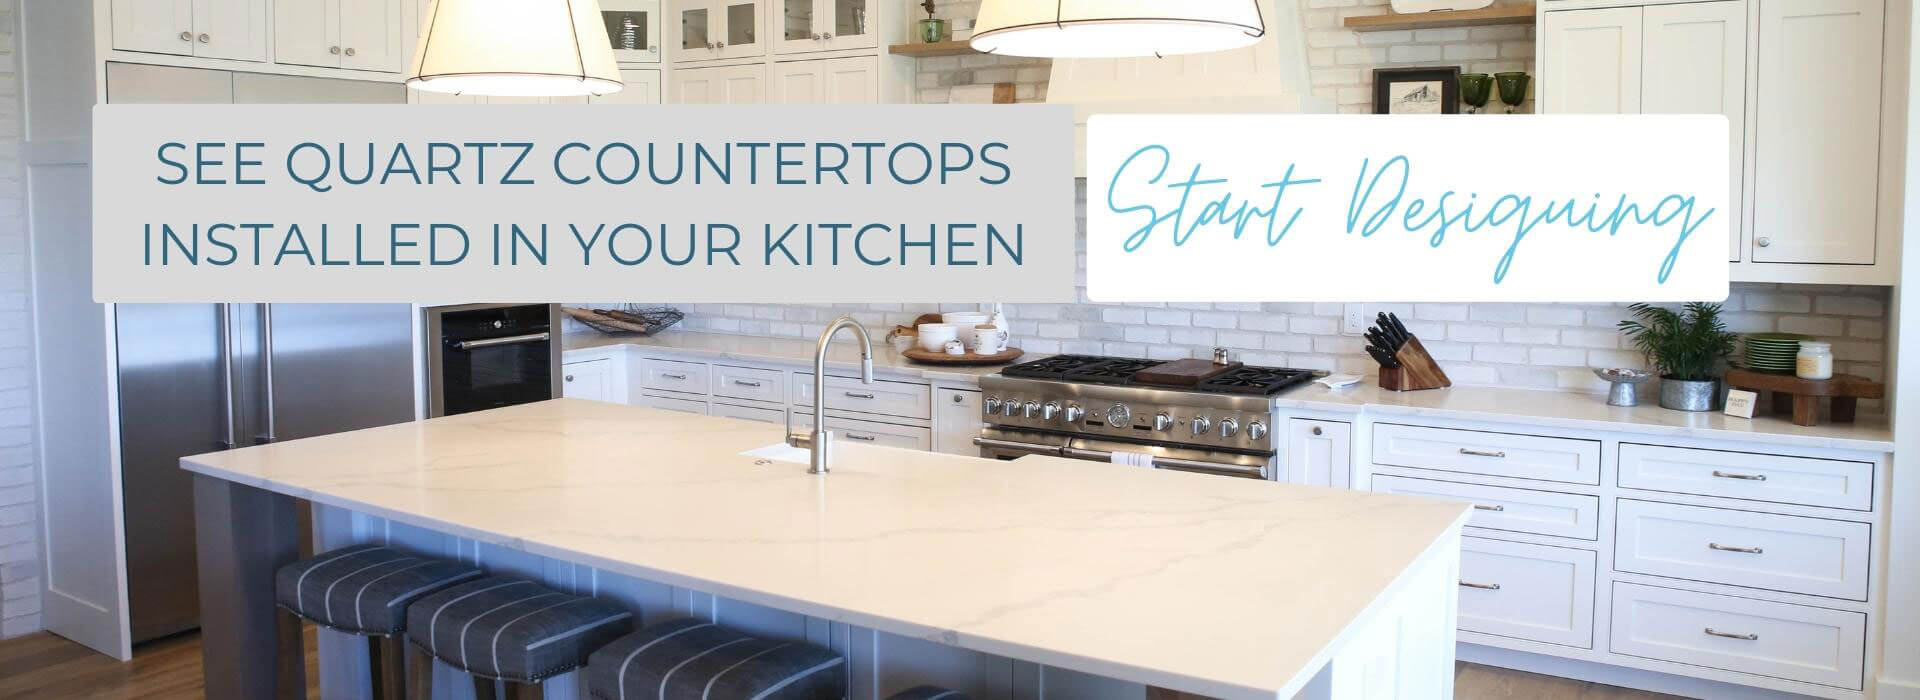 quartz kitchen design button image